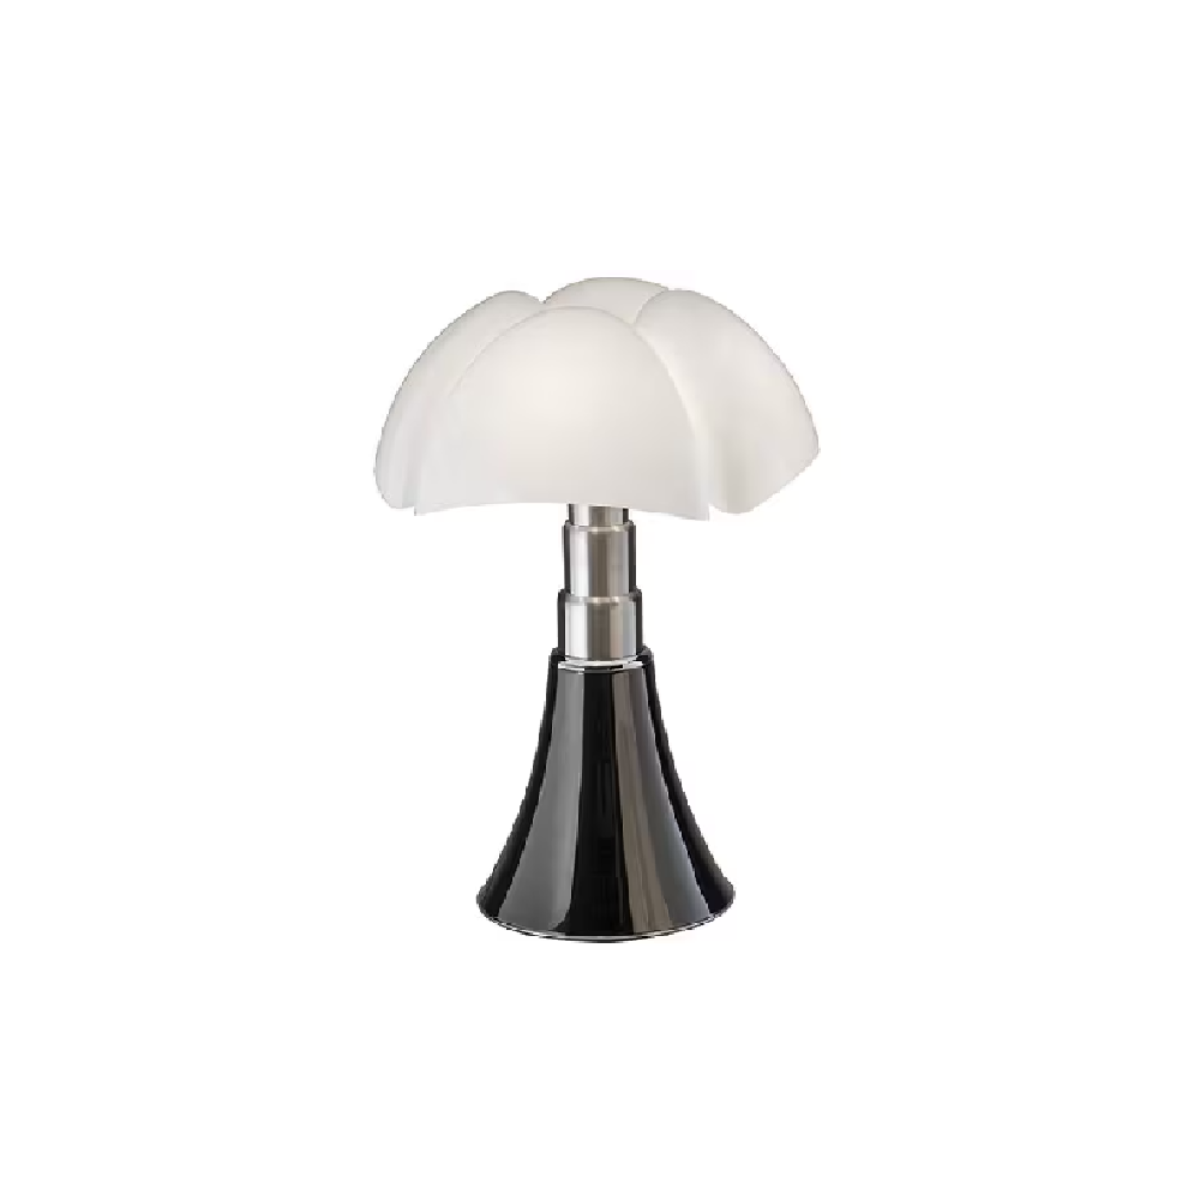 Martinelli Luce Pipistrello Table Lamp Large (6 colors)